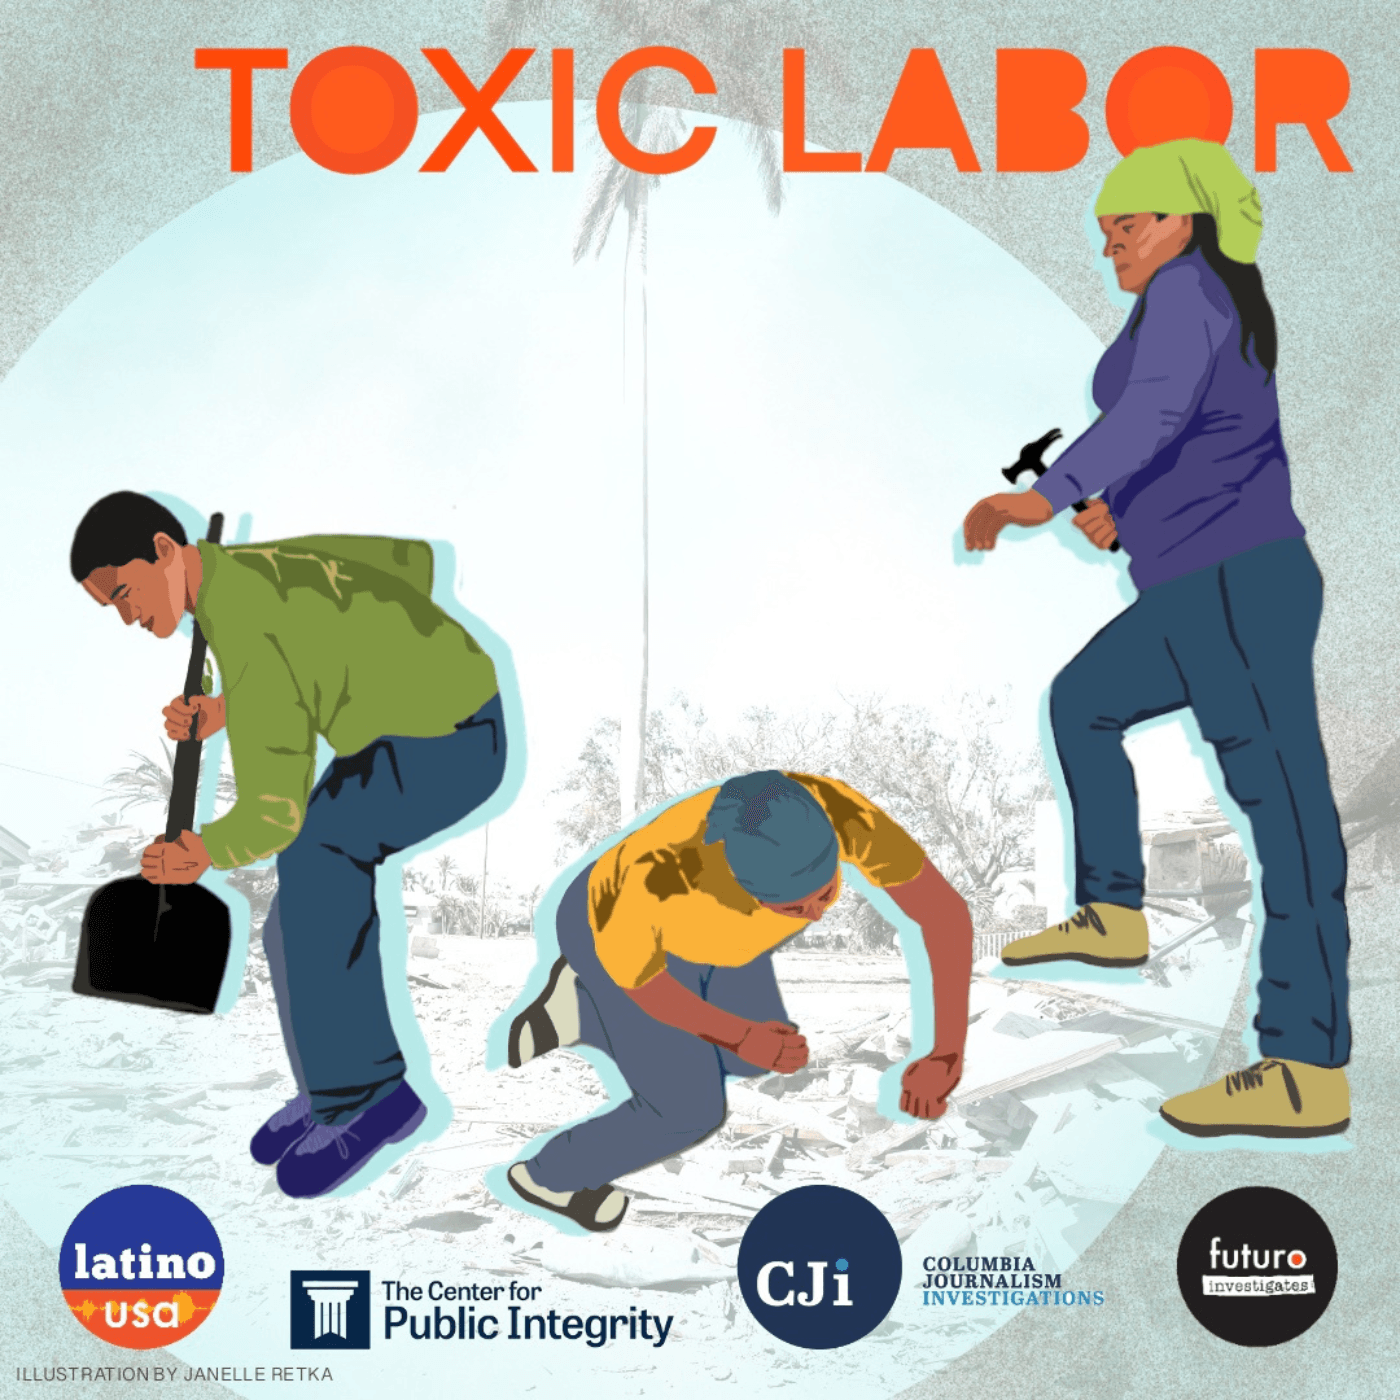 Thumbnail for "Toxic Labor".